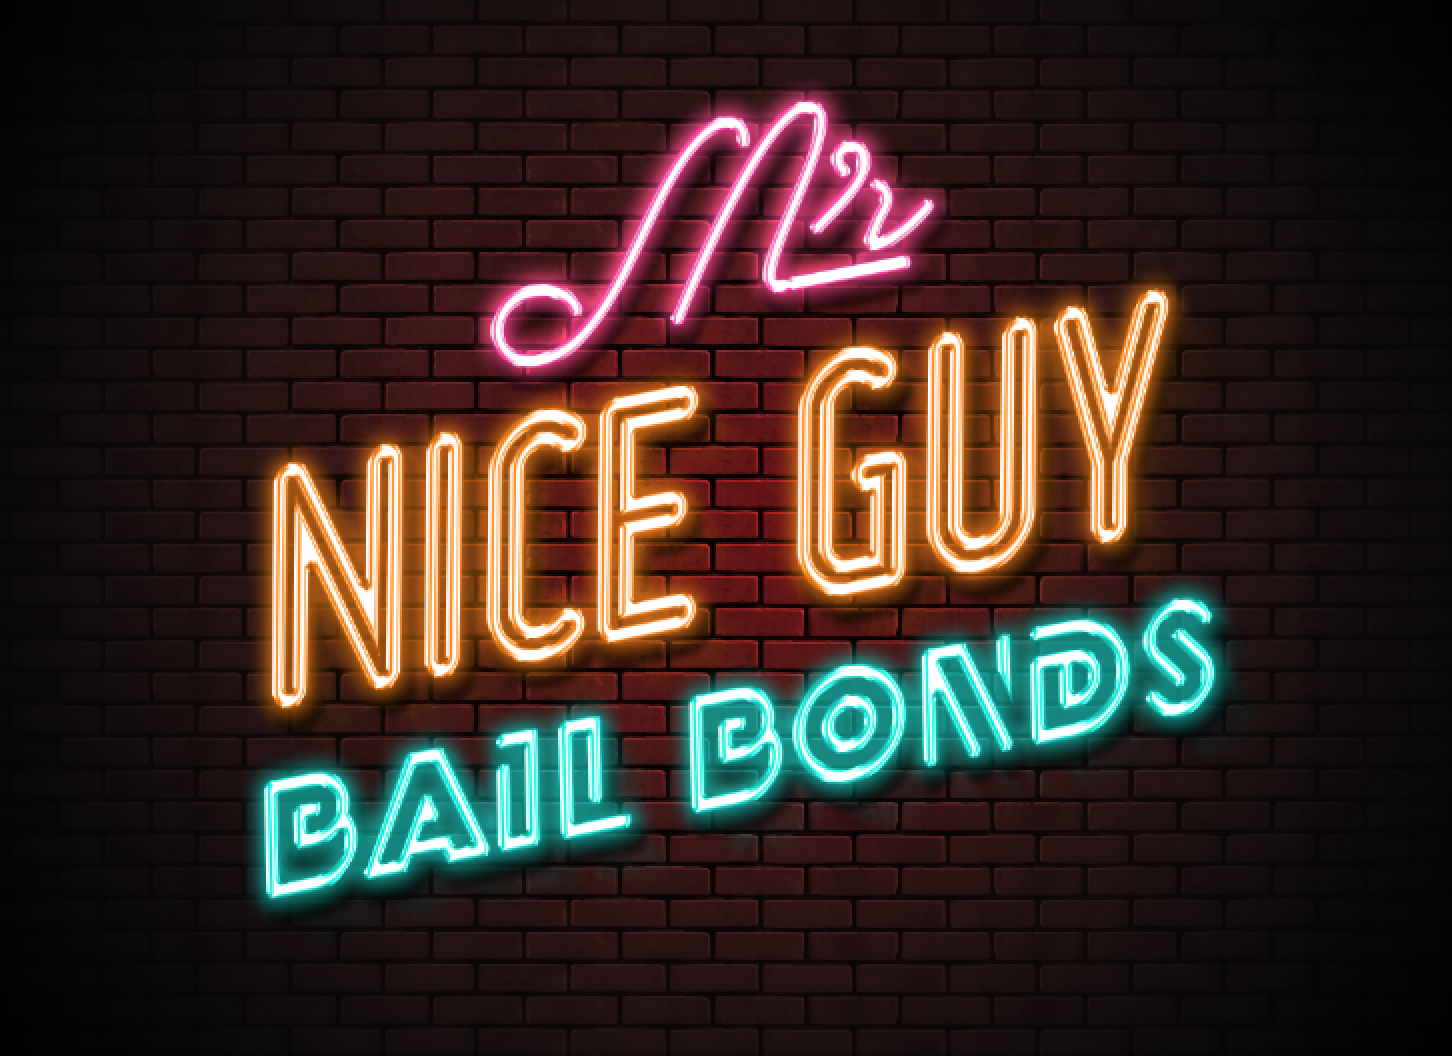 5% bail bonds